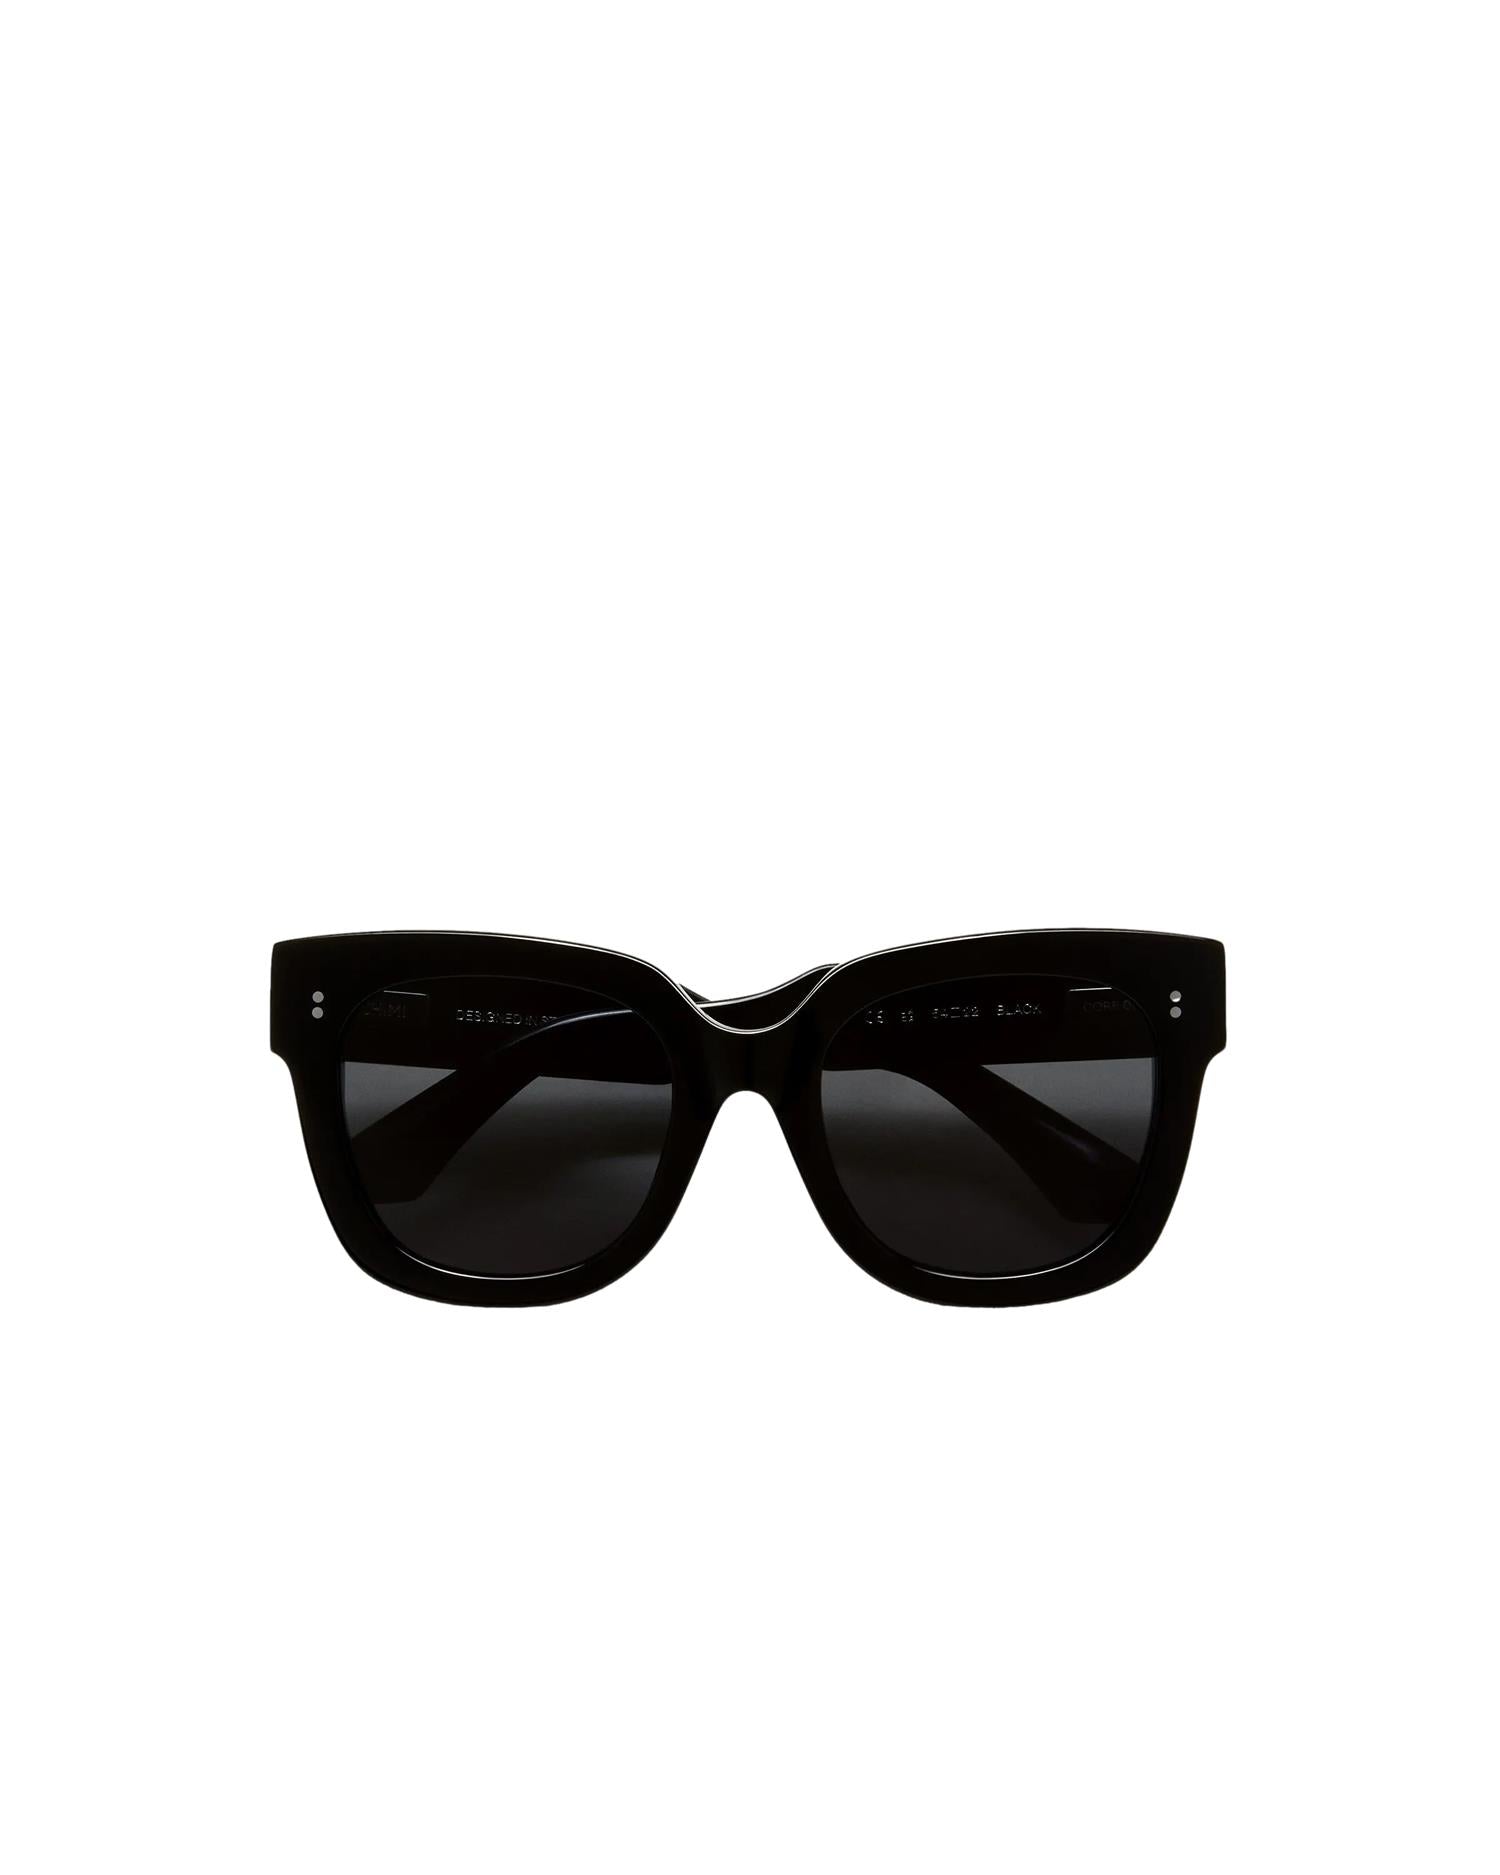 Shop Chimi Eyewear Black 08 Core Solbriller Sort her - Norsk, rask levering ikkebutikk.no